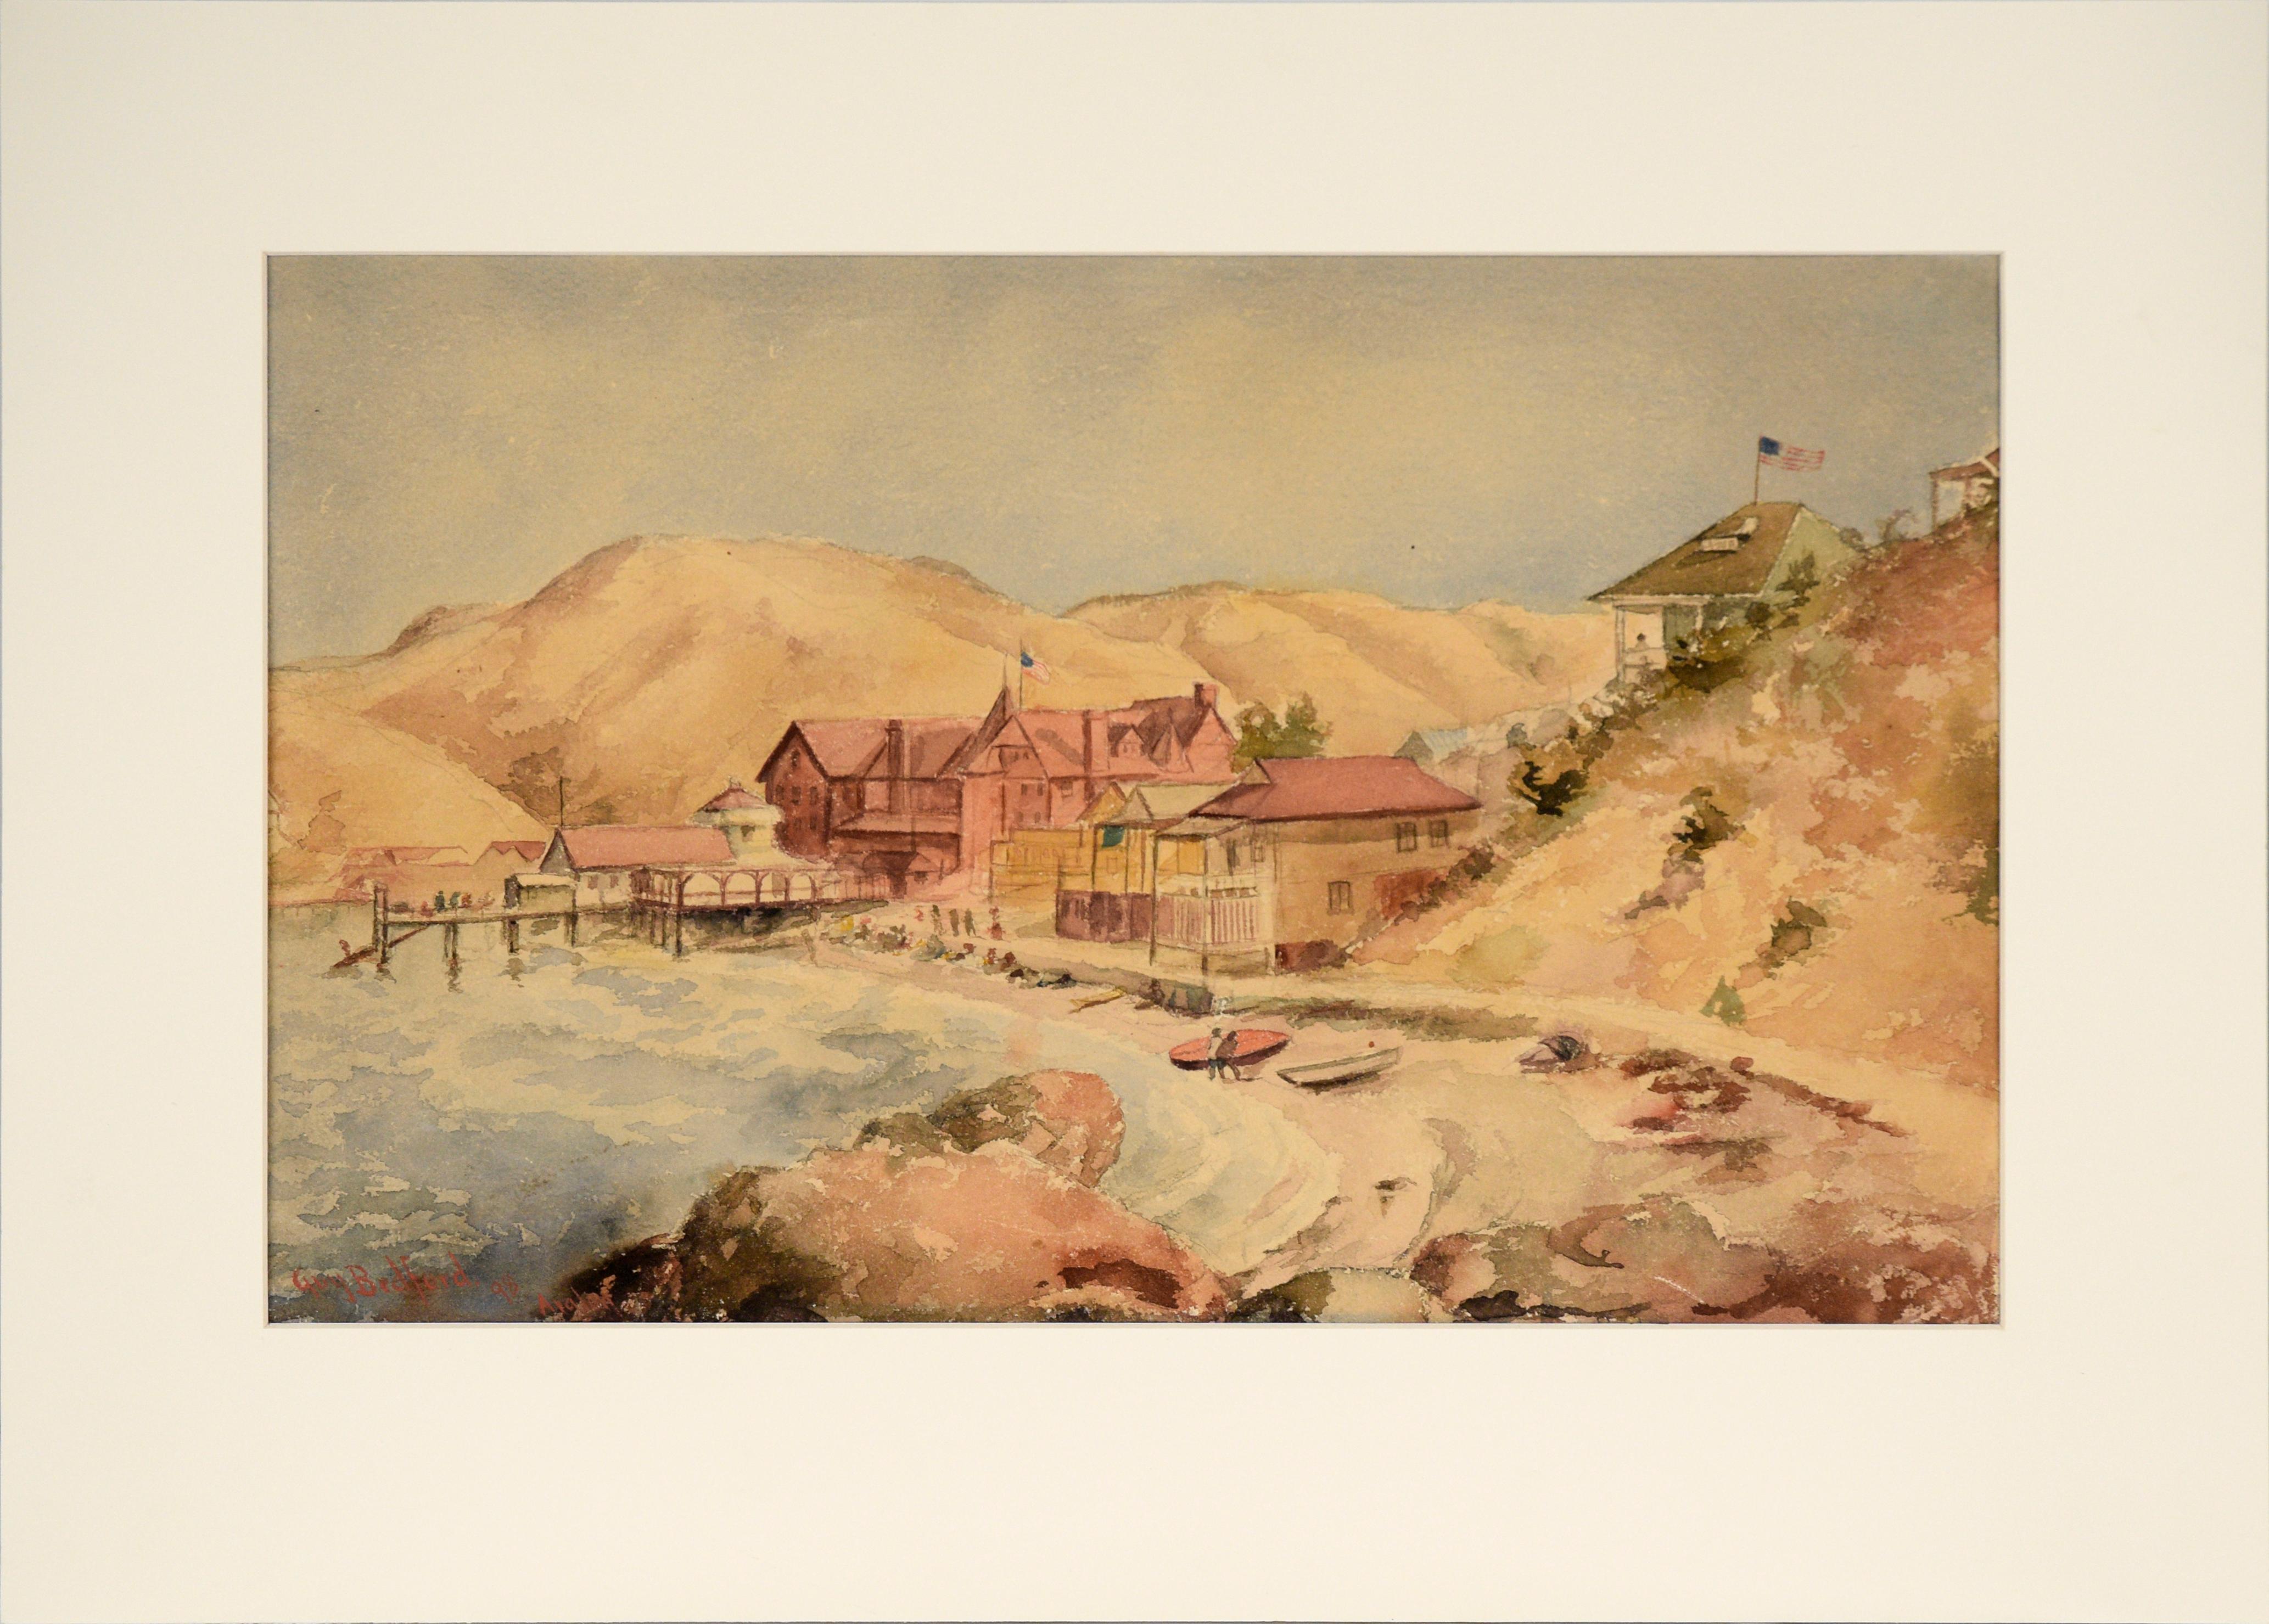 Avalon des späten 19. Jahrhunderts, Catalina-Insel 